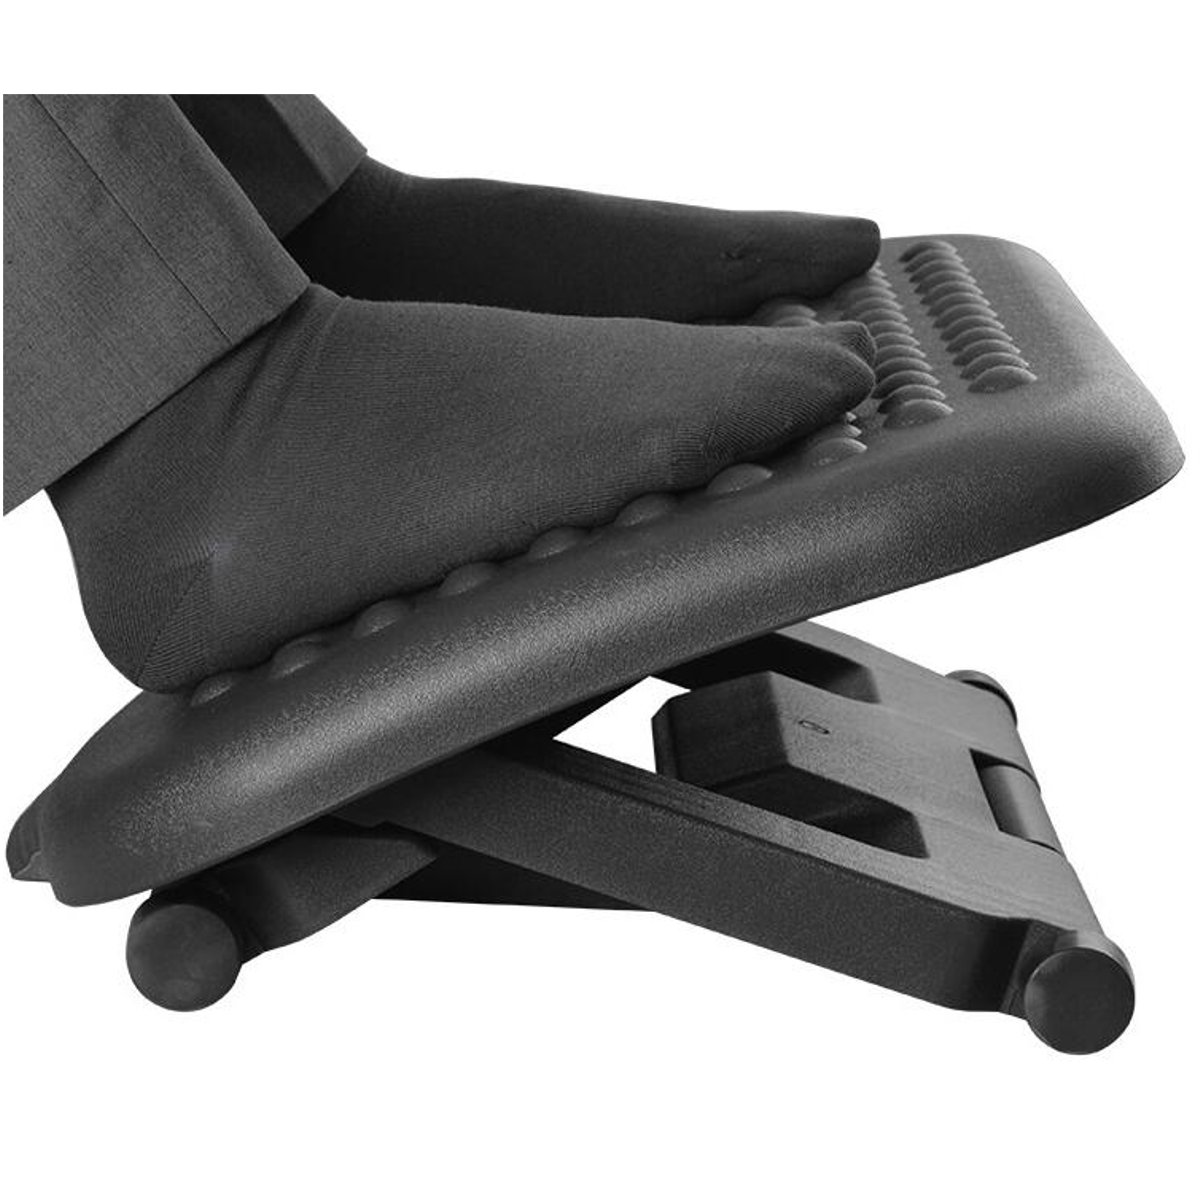 Adjustable Tilting Footrest Under Desk Ergonomic Office Foot Rest Pad Footstool Foot Pegs 11